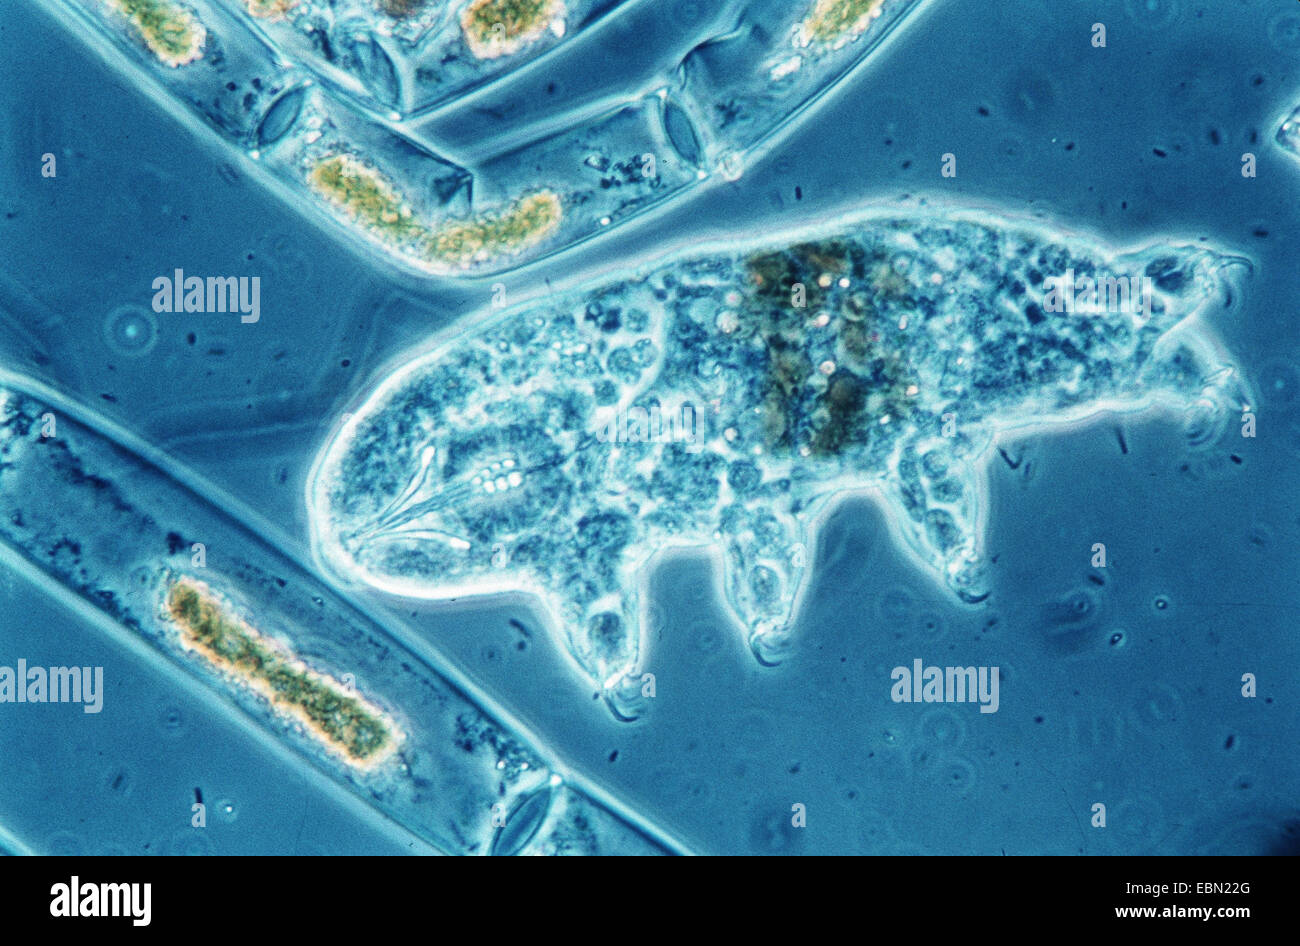 water bear, tardigrade (Hypsibius dujardini), microscopic photograph Stock Photo